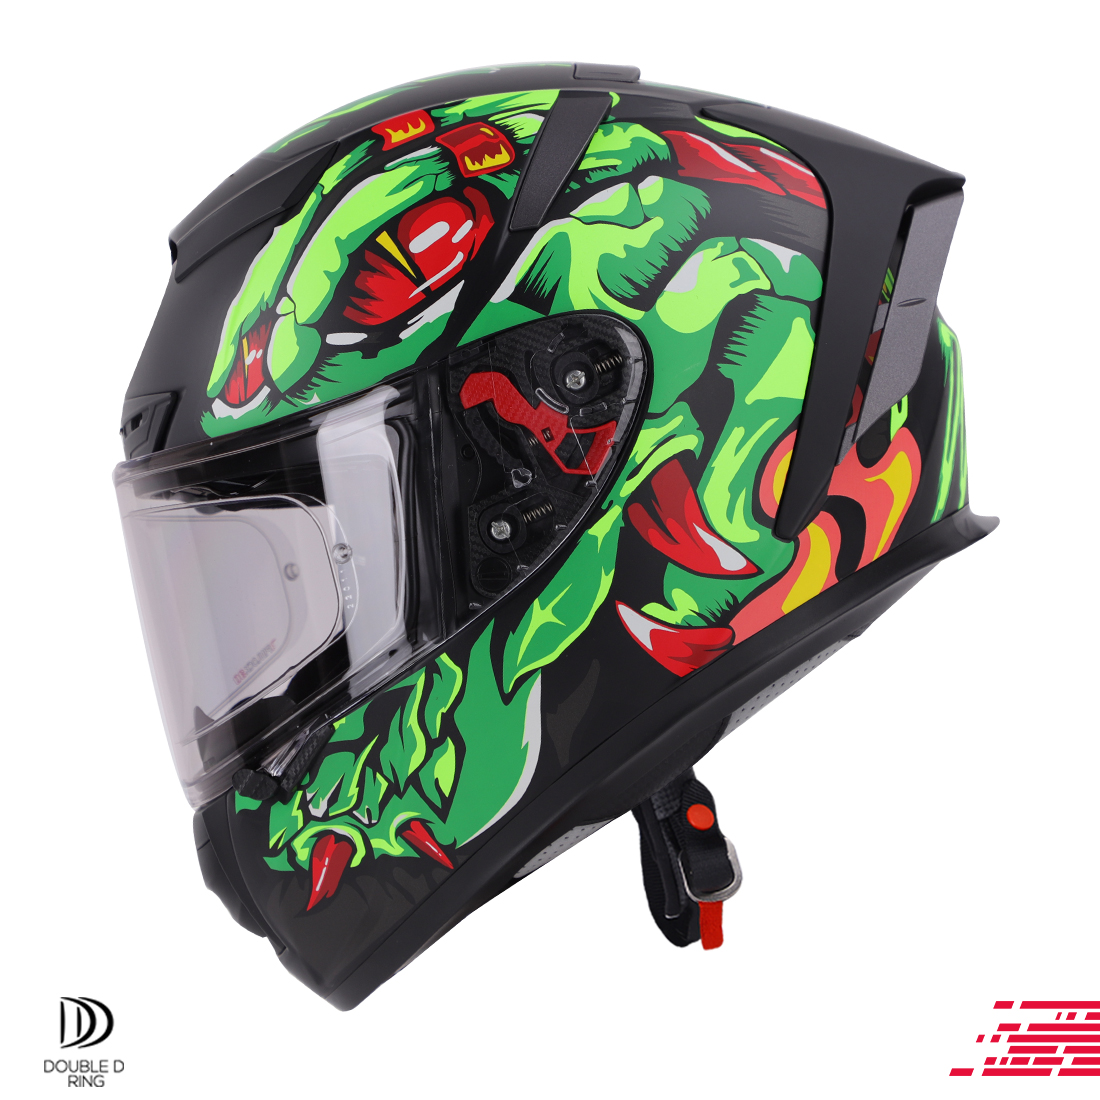 Steelbird SA-5 Monster ISI/DOT Certified Full Face Graphic Helmet With Outer Anti-Fog Clear Visor (Matt Black Green)